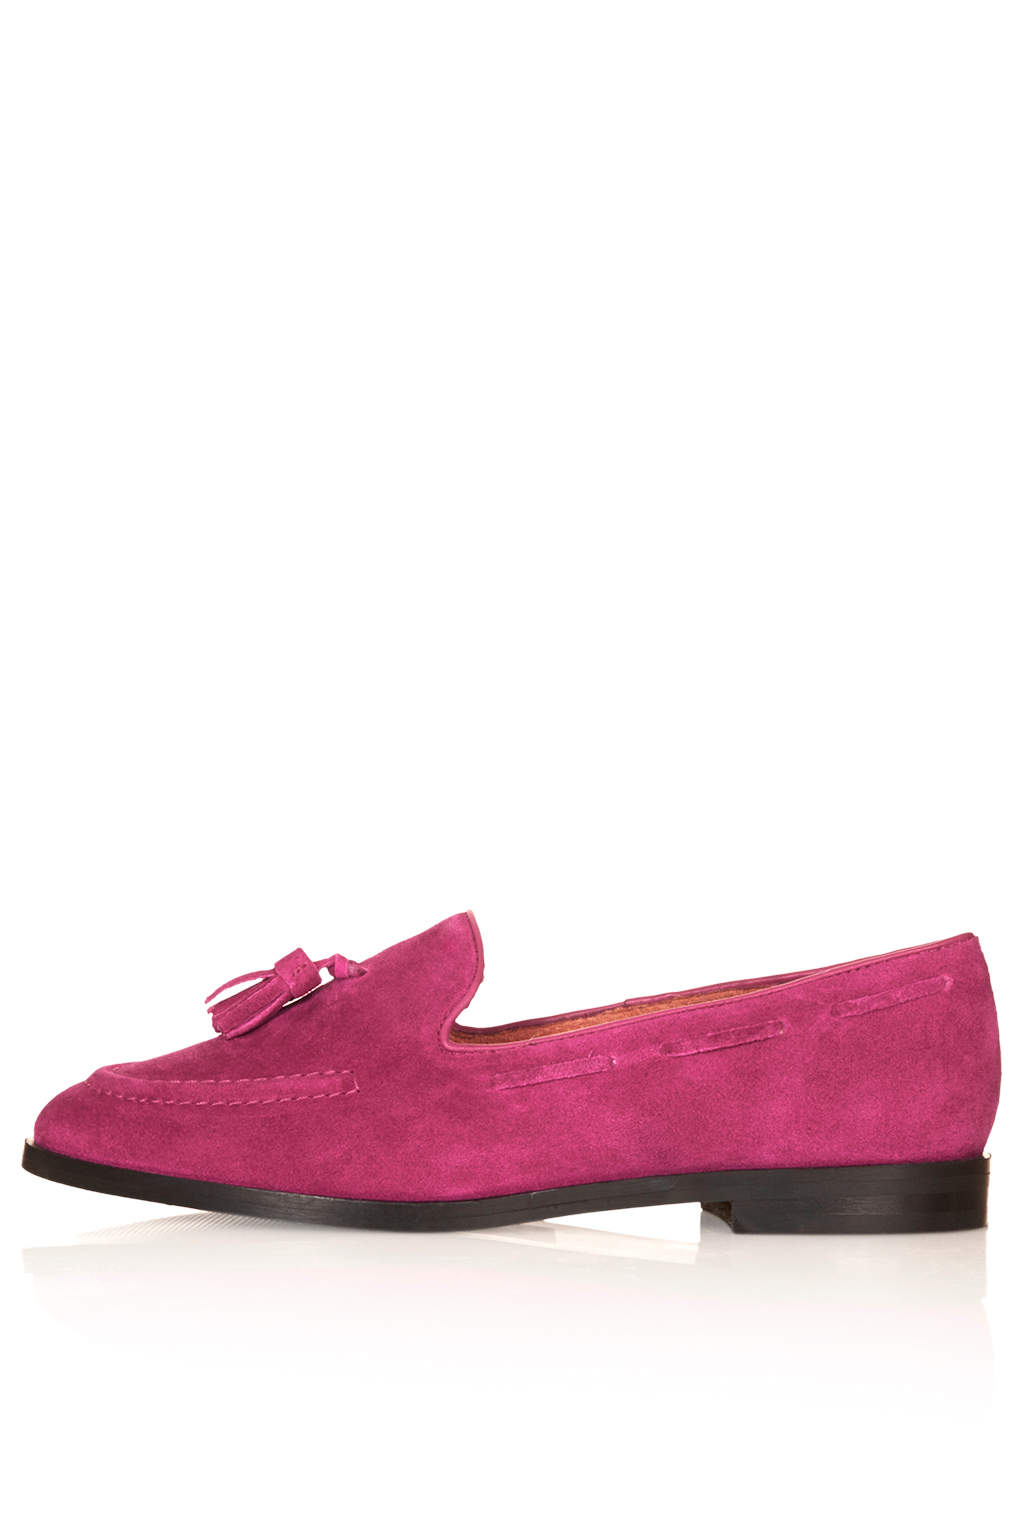 Topshop Kiki Suede Tassel Loafers in Pink | Lyst